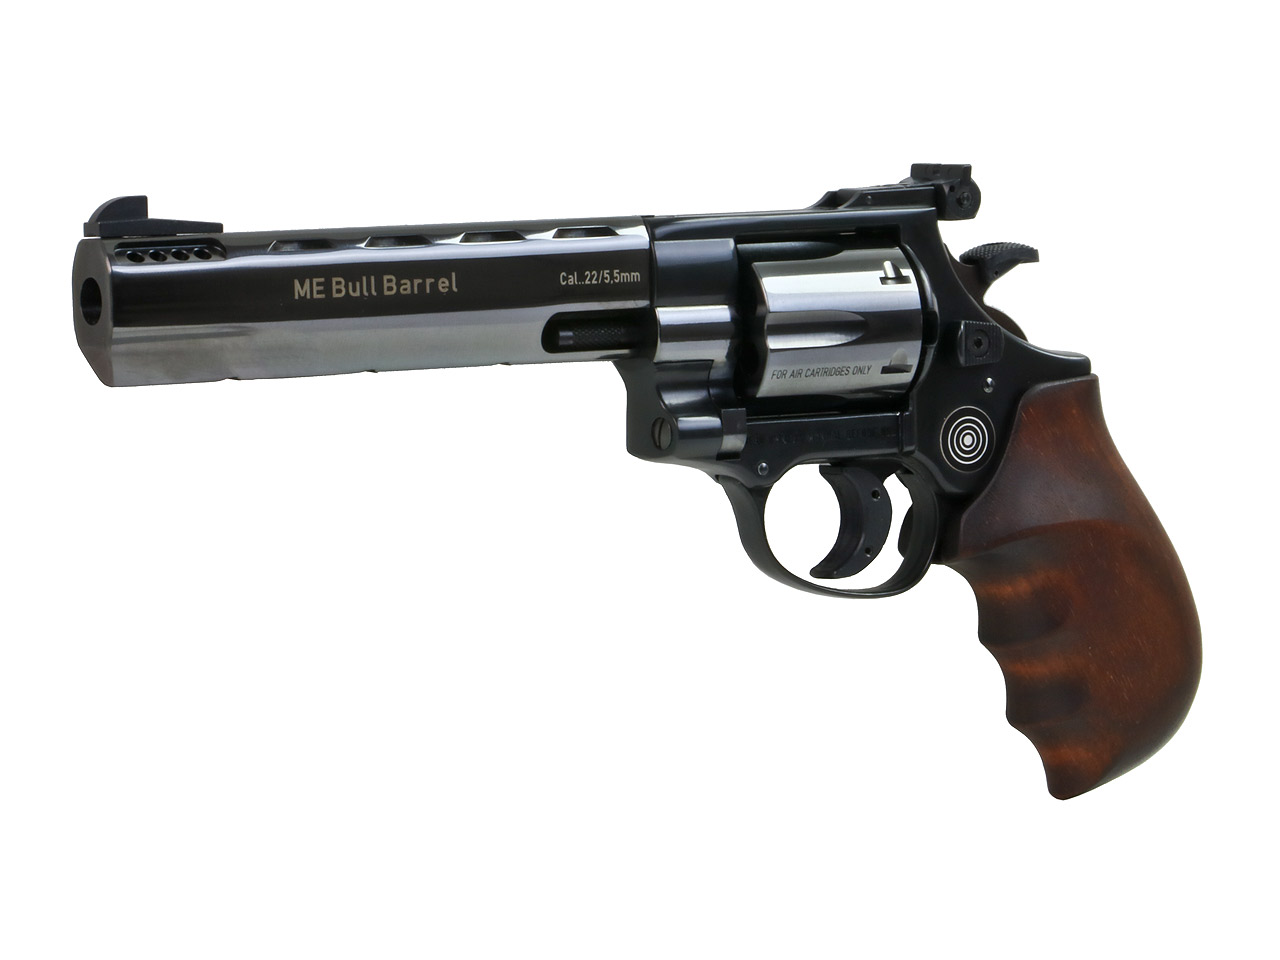 Laufmantel 6 Zoll für LEP Druckluft Revolver ME Bull Barrel, brüniert, Kaliber 5,5 mm